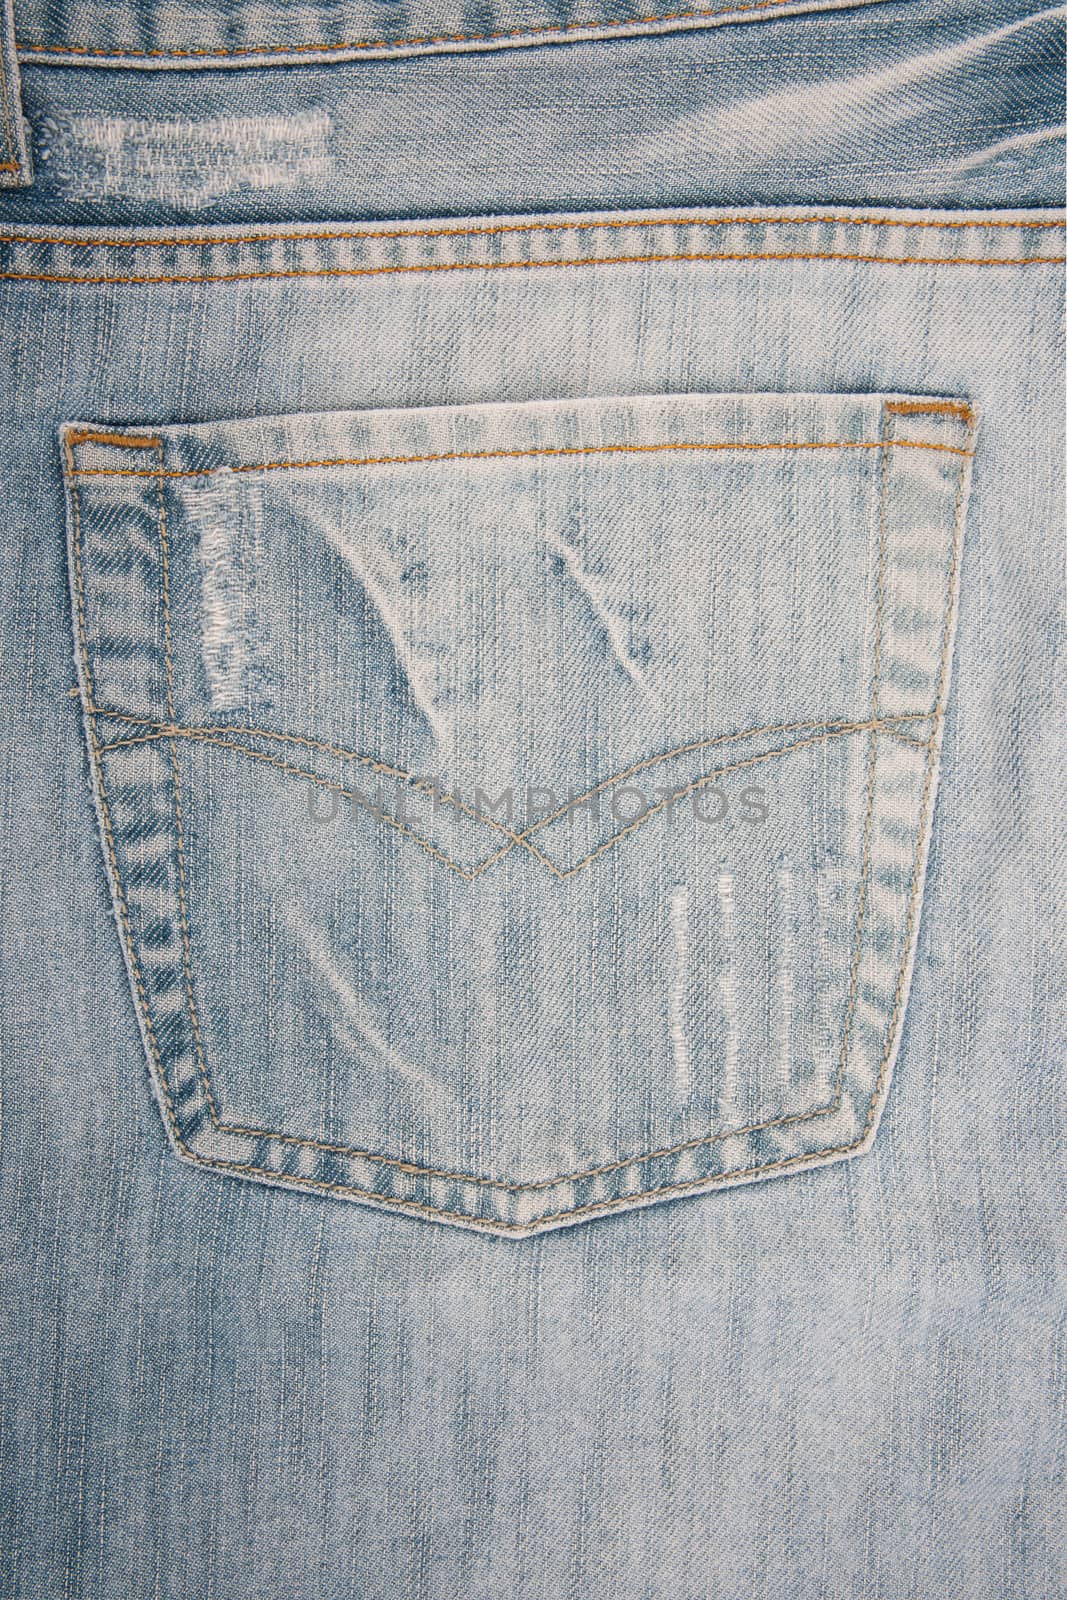 Empty back pocket of jeans